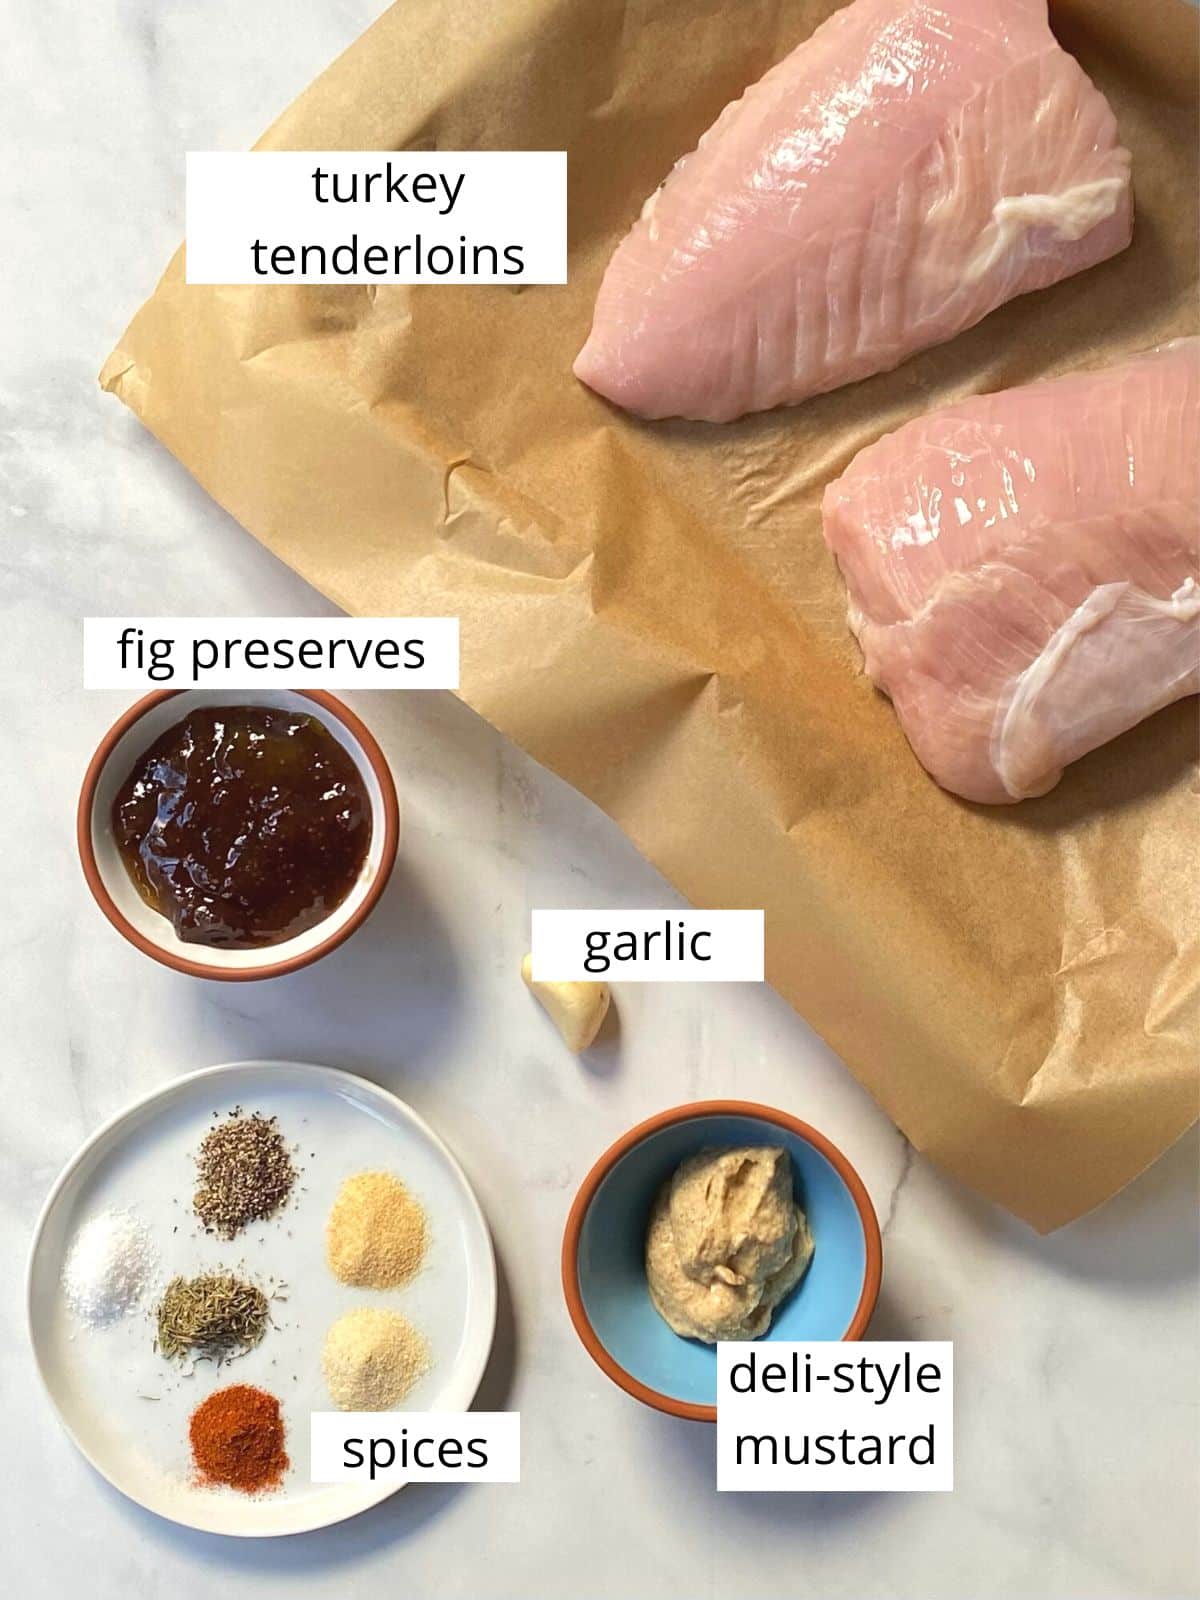 ingredients for baked turkey tenderloins.